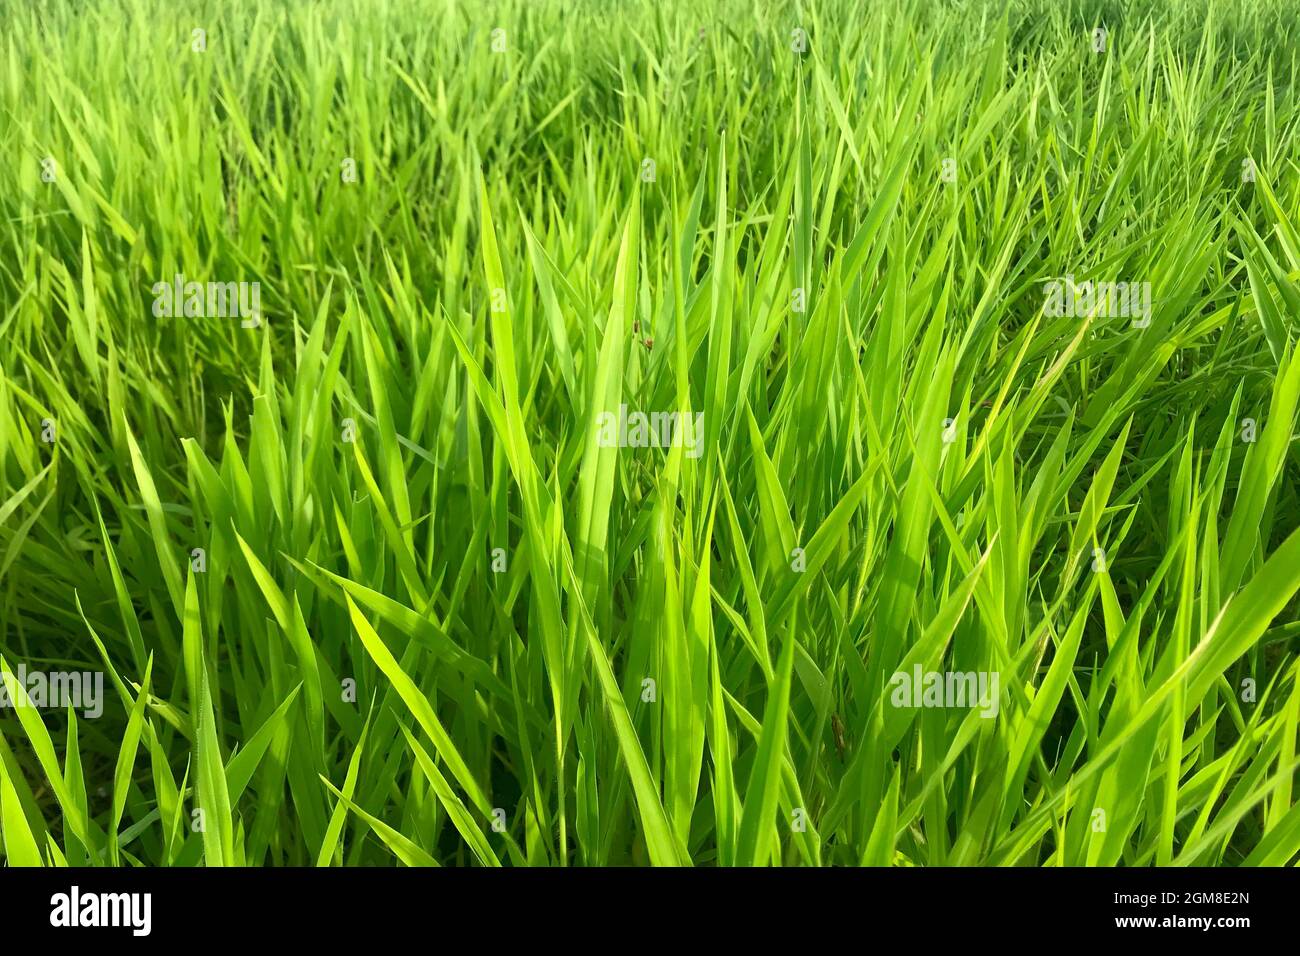 Ruzi grass for feeding animal, Brachiaria ruziziensis Stock Photo